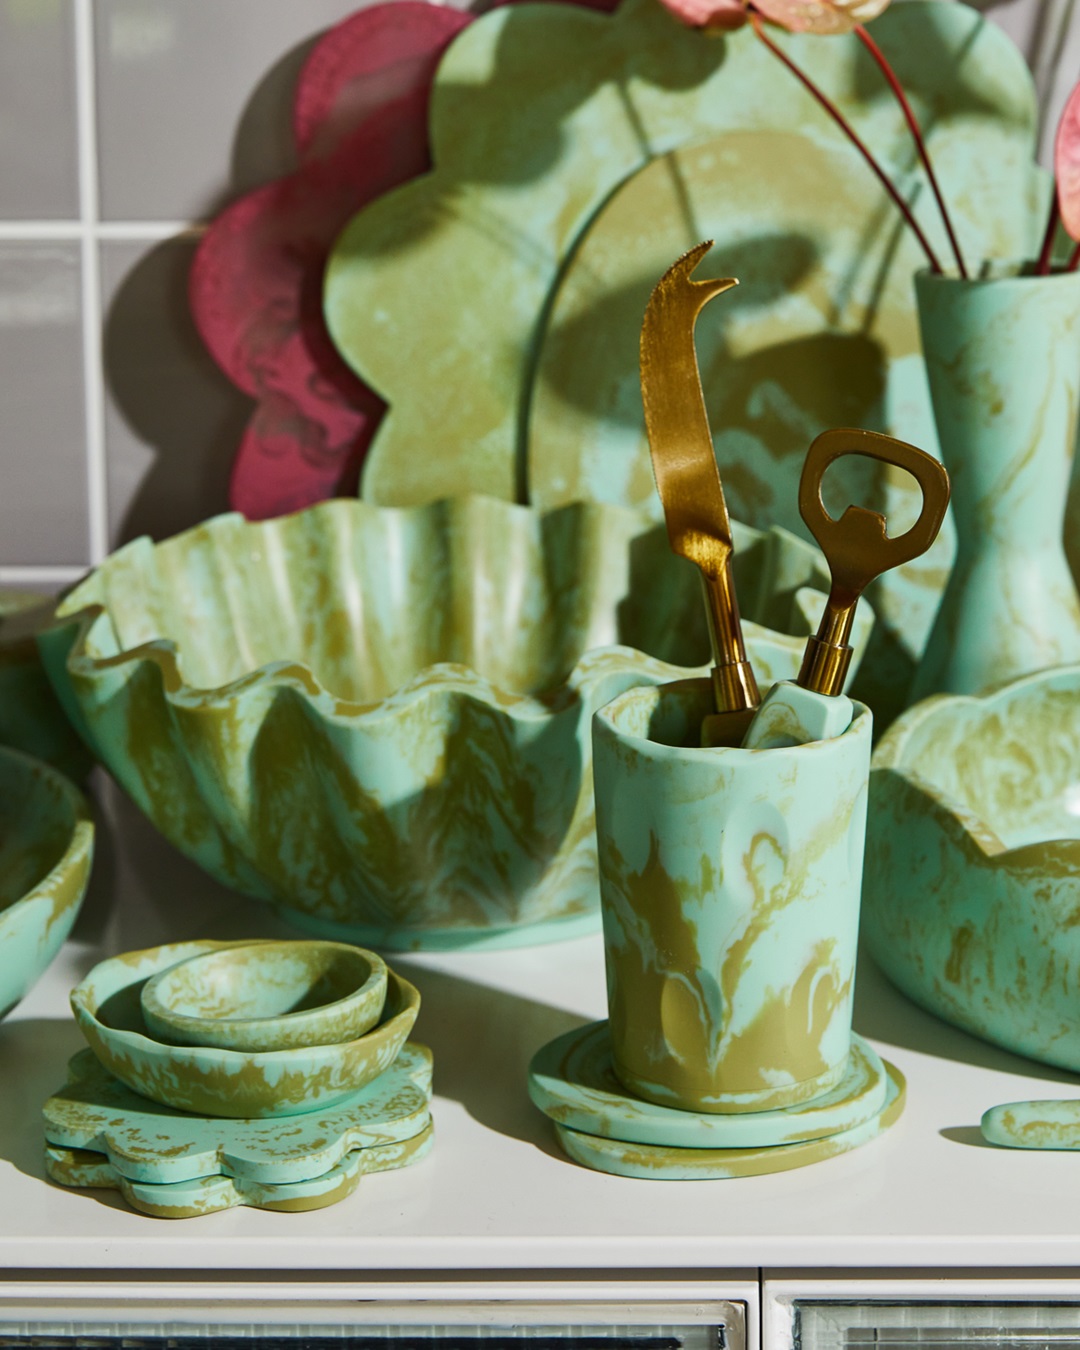 Artichoke green kitchenware on table